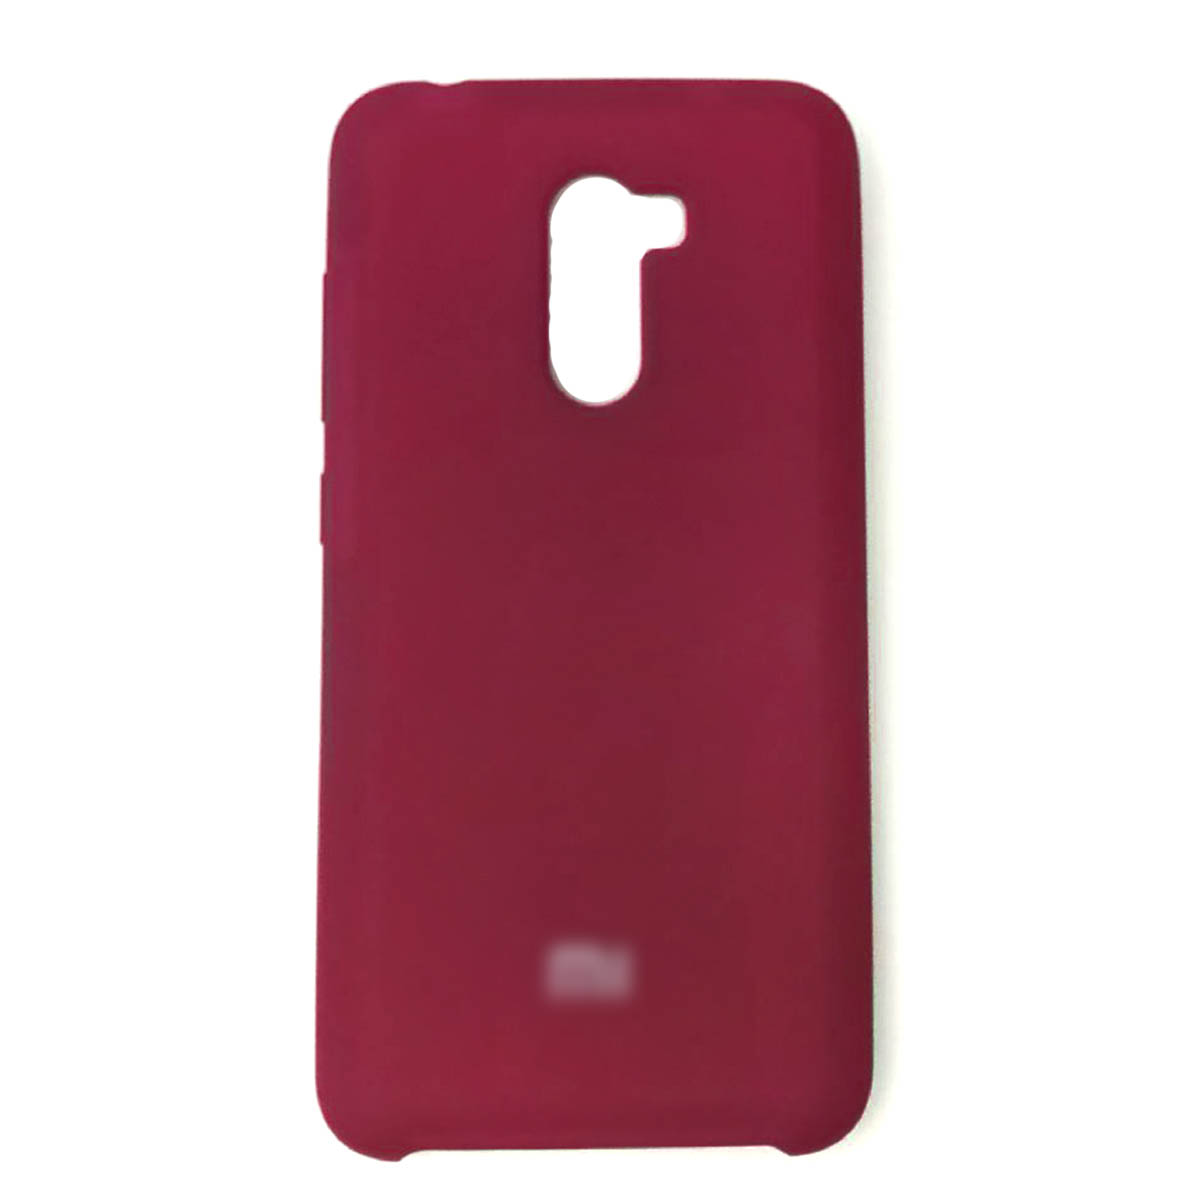 Чехол накладка Silicon Cover для XIAOMI POCOPHONE F1, силикон, бархат, цвет вишневый